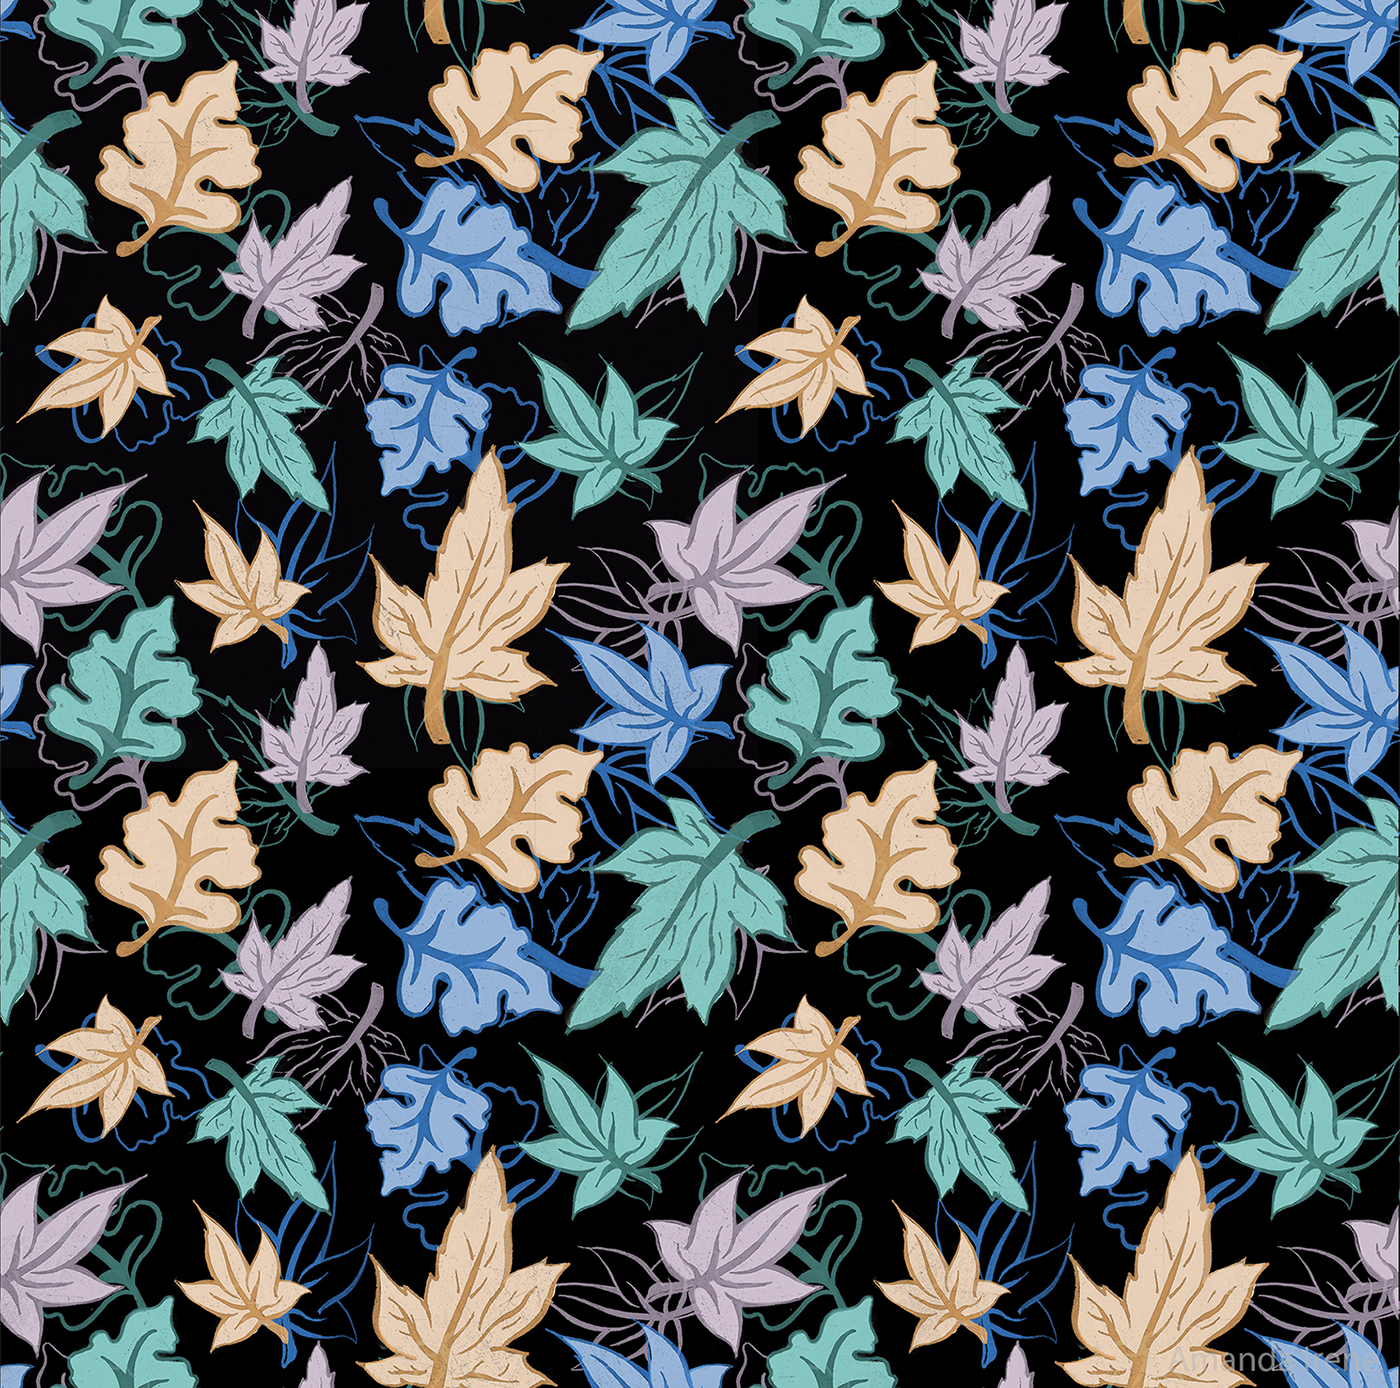 Fall leaves season leaf shrubbery Nature pattern textile repeating ILLUSTRATION 